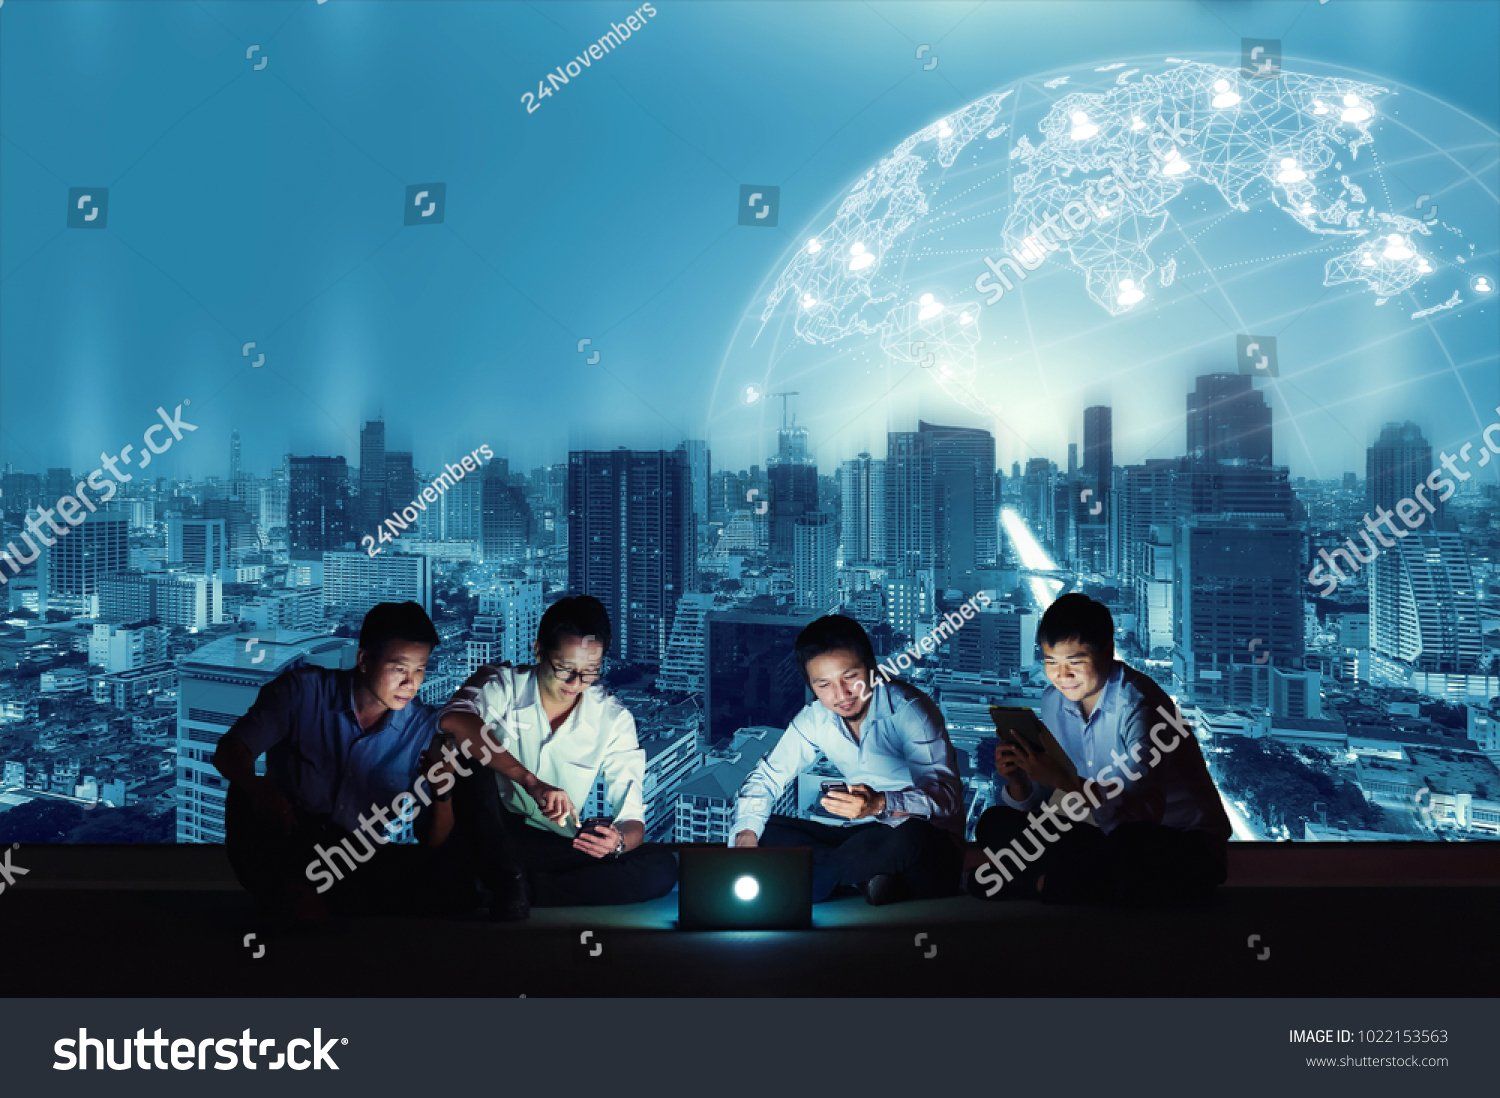 Asian music group sky